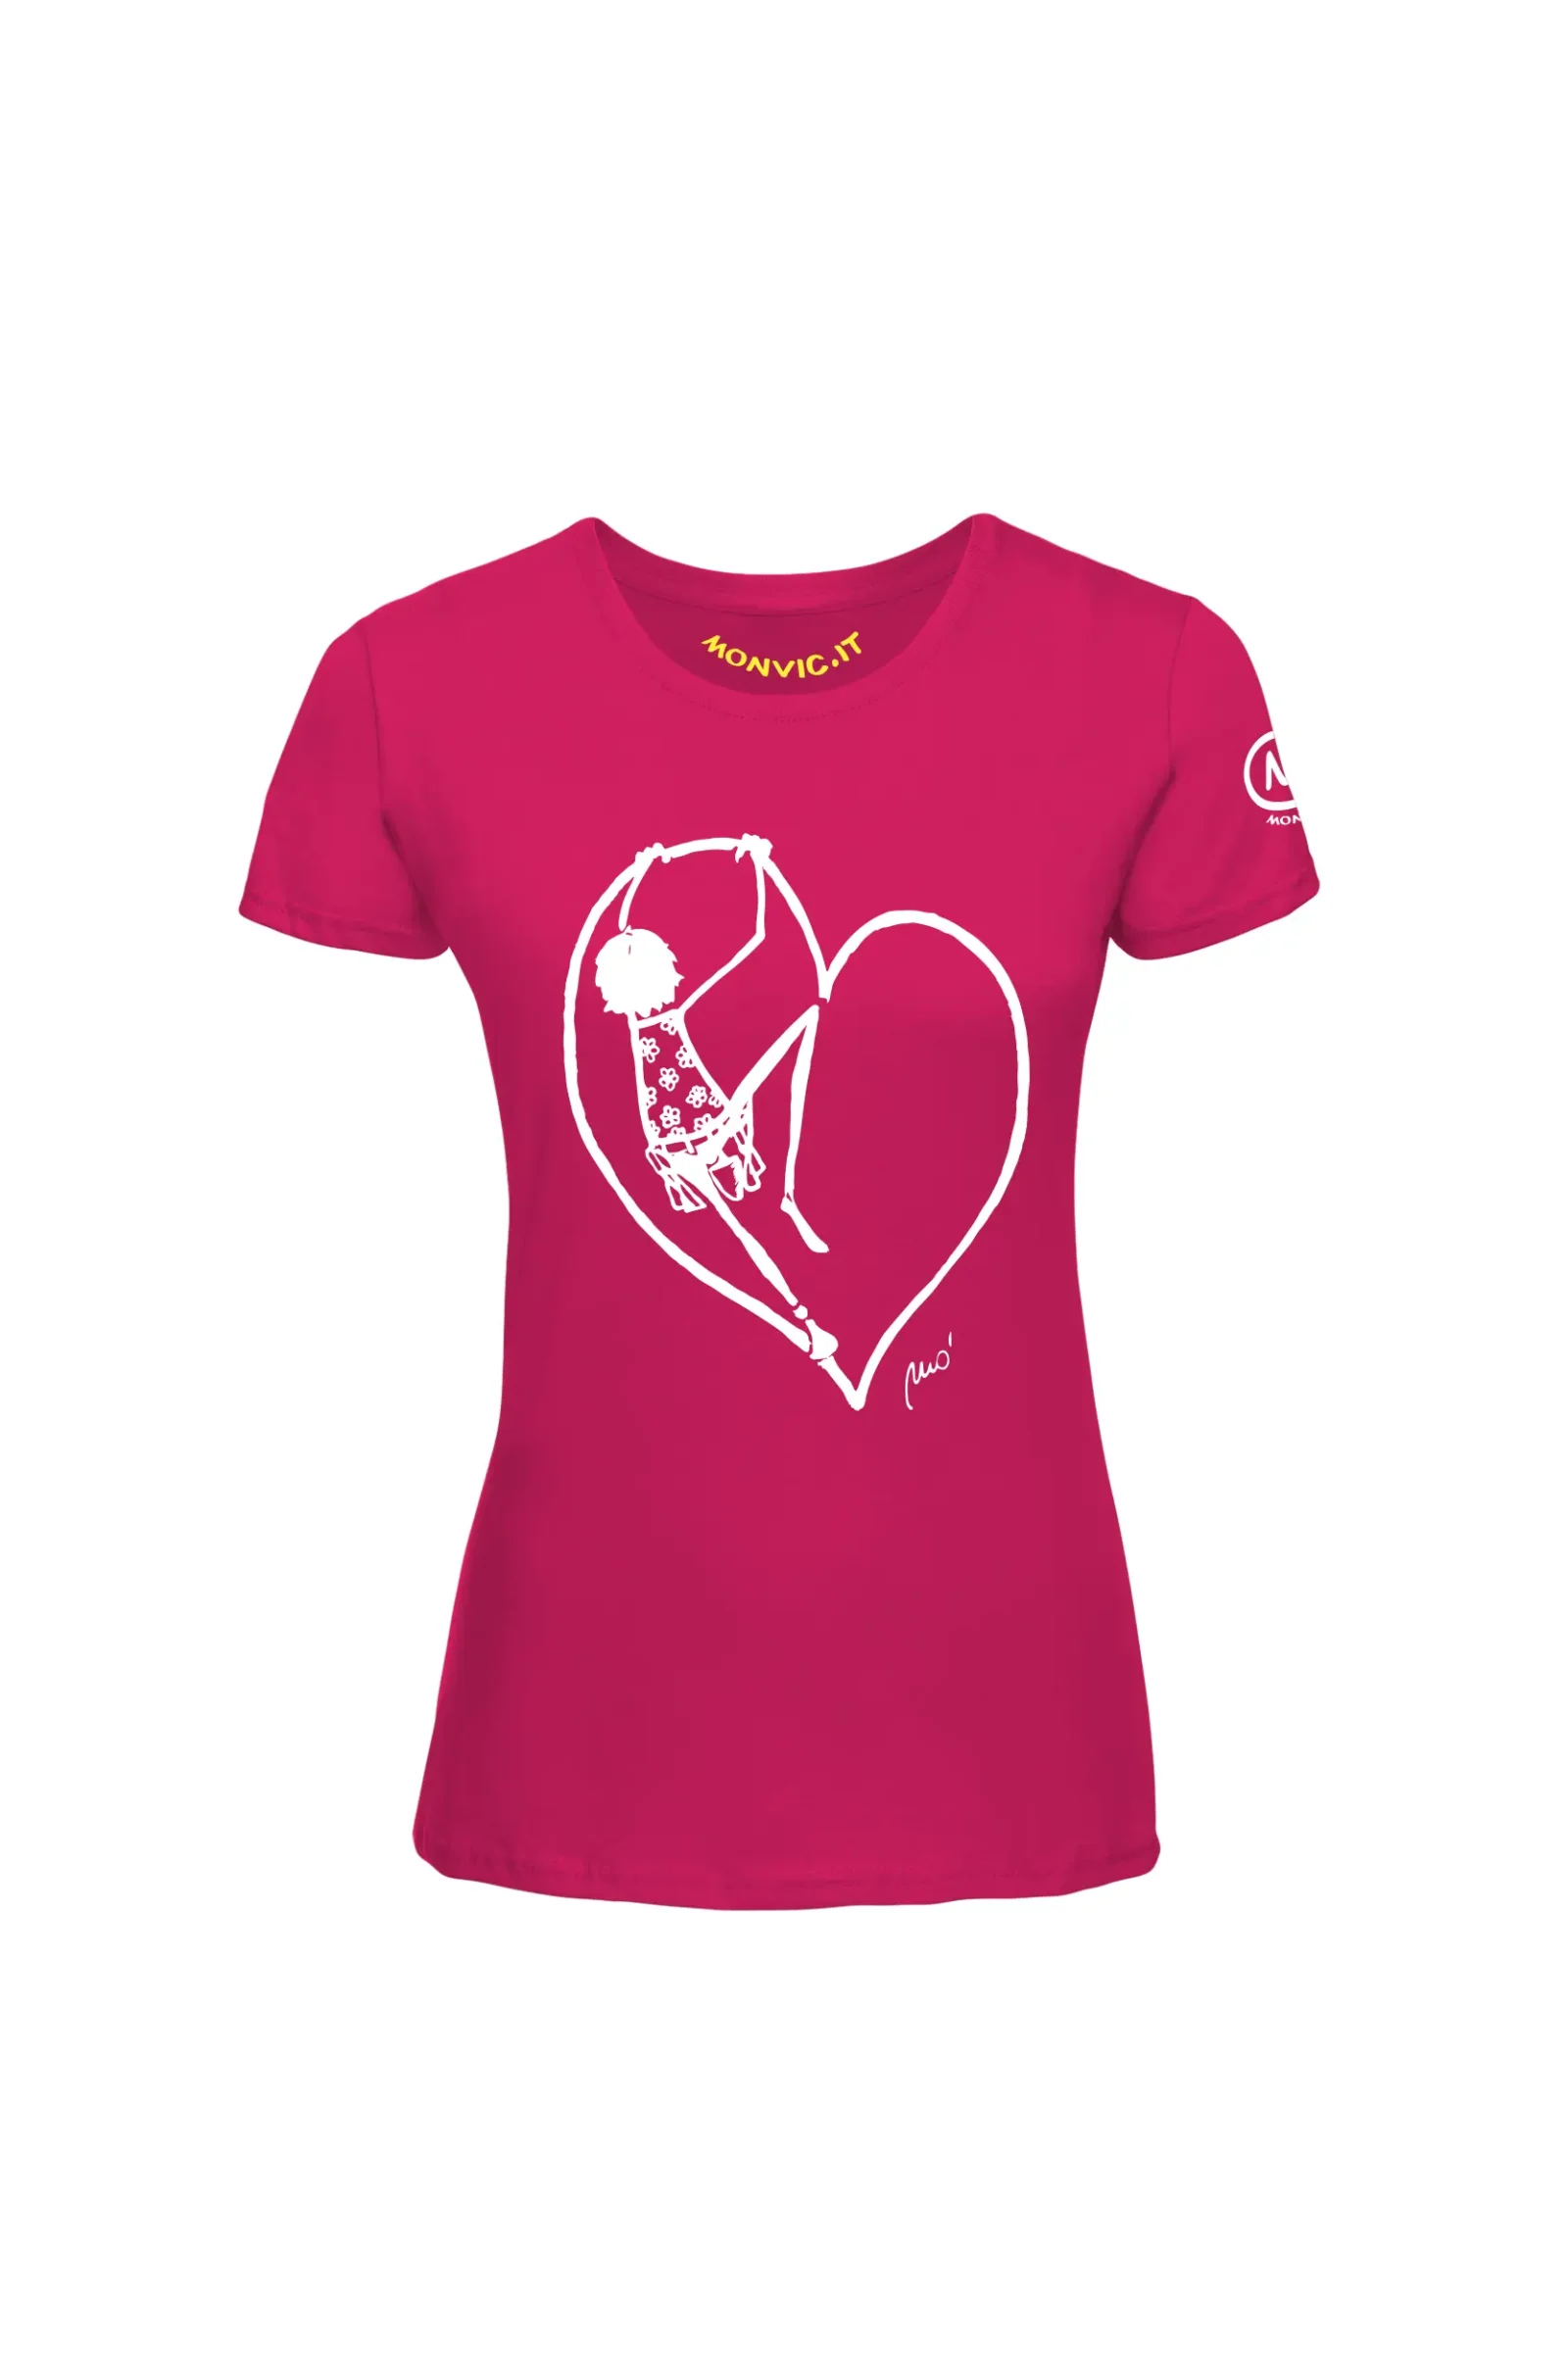 T-shirt d'escalade femme - coton fuchsia - graphisme "Pina" - SHARON by MONVIC